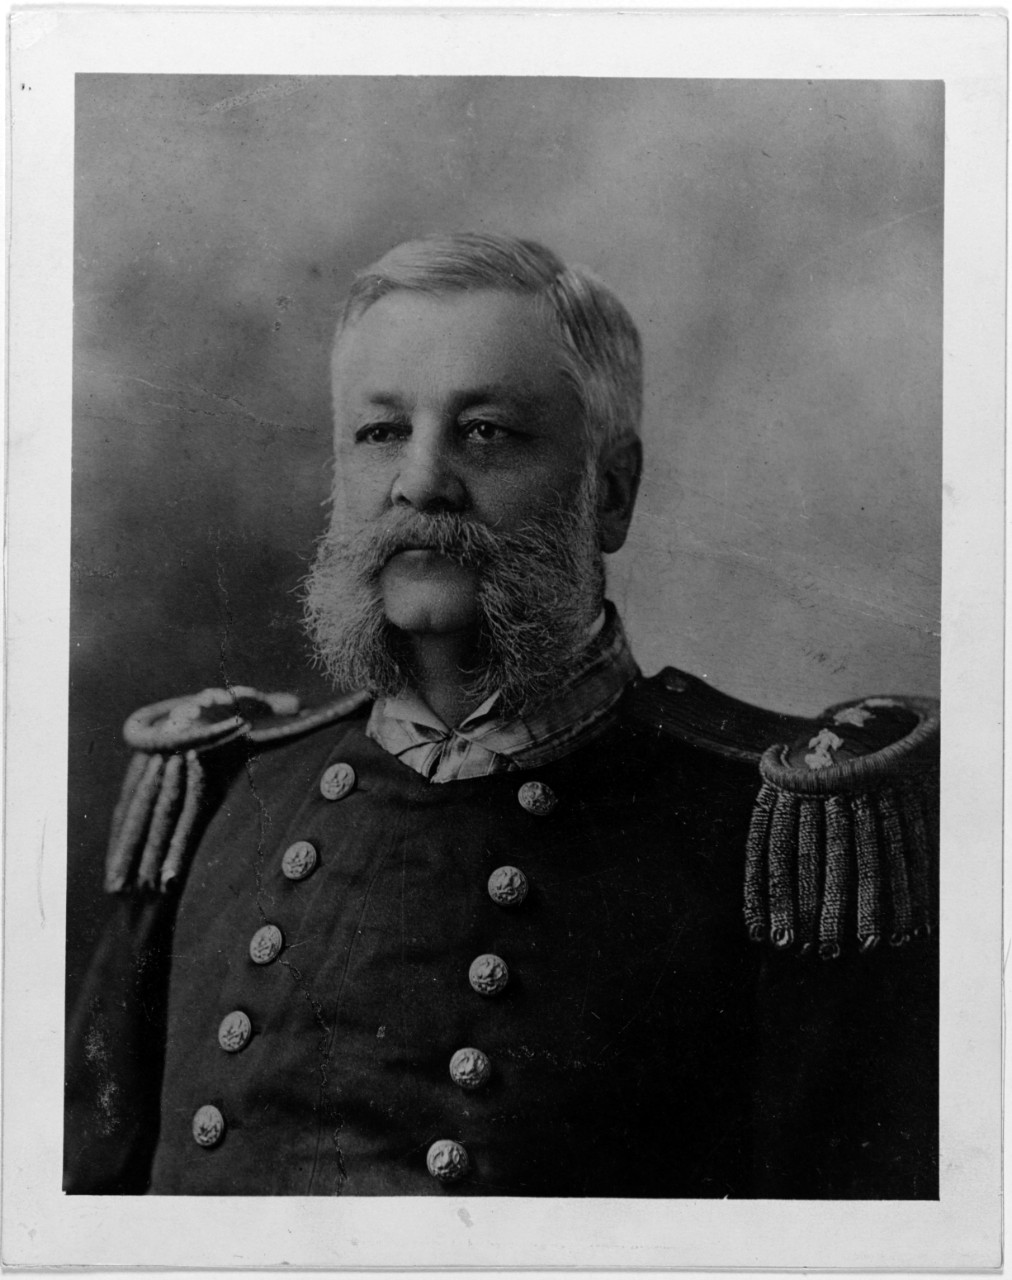 Commodore John A. Howell, USN